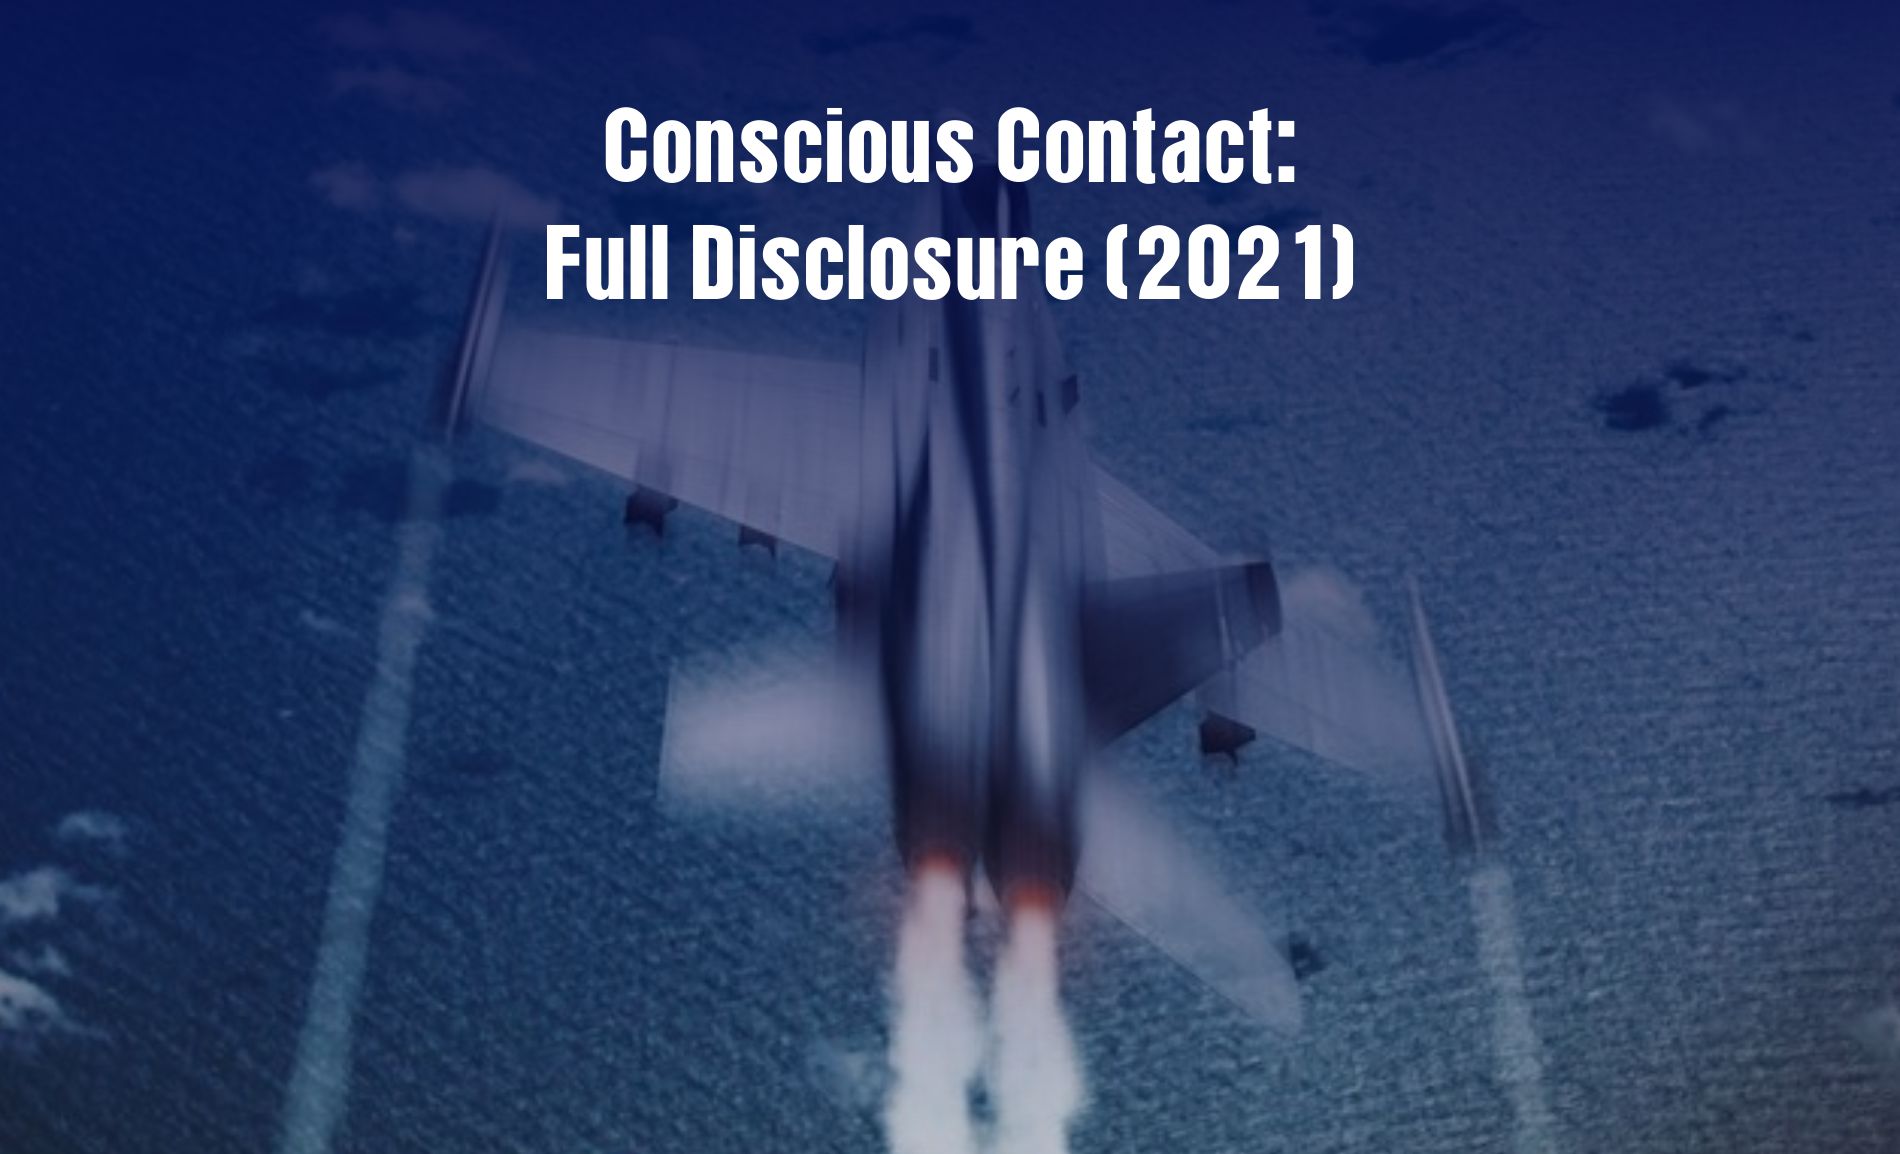 Conscious Contact: Full Disclosure (2021)